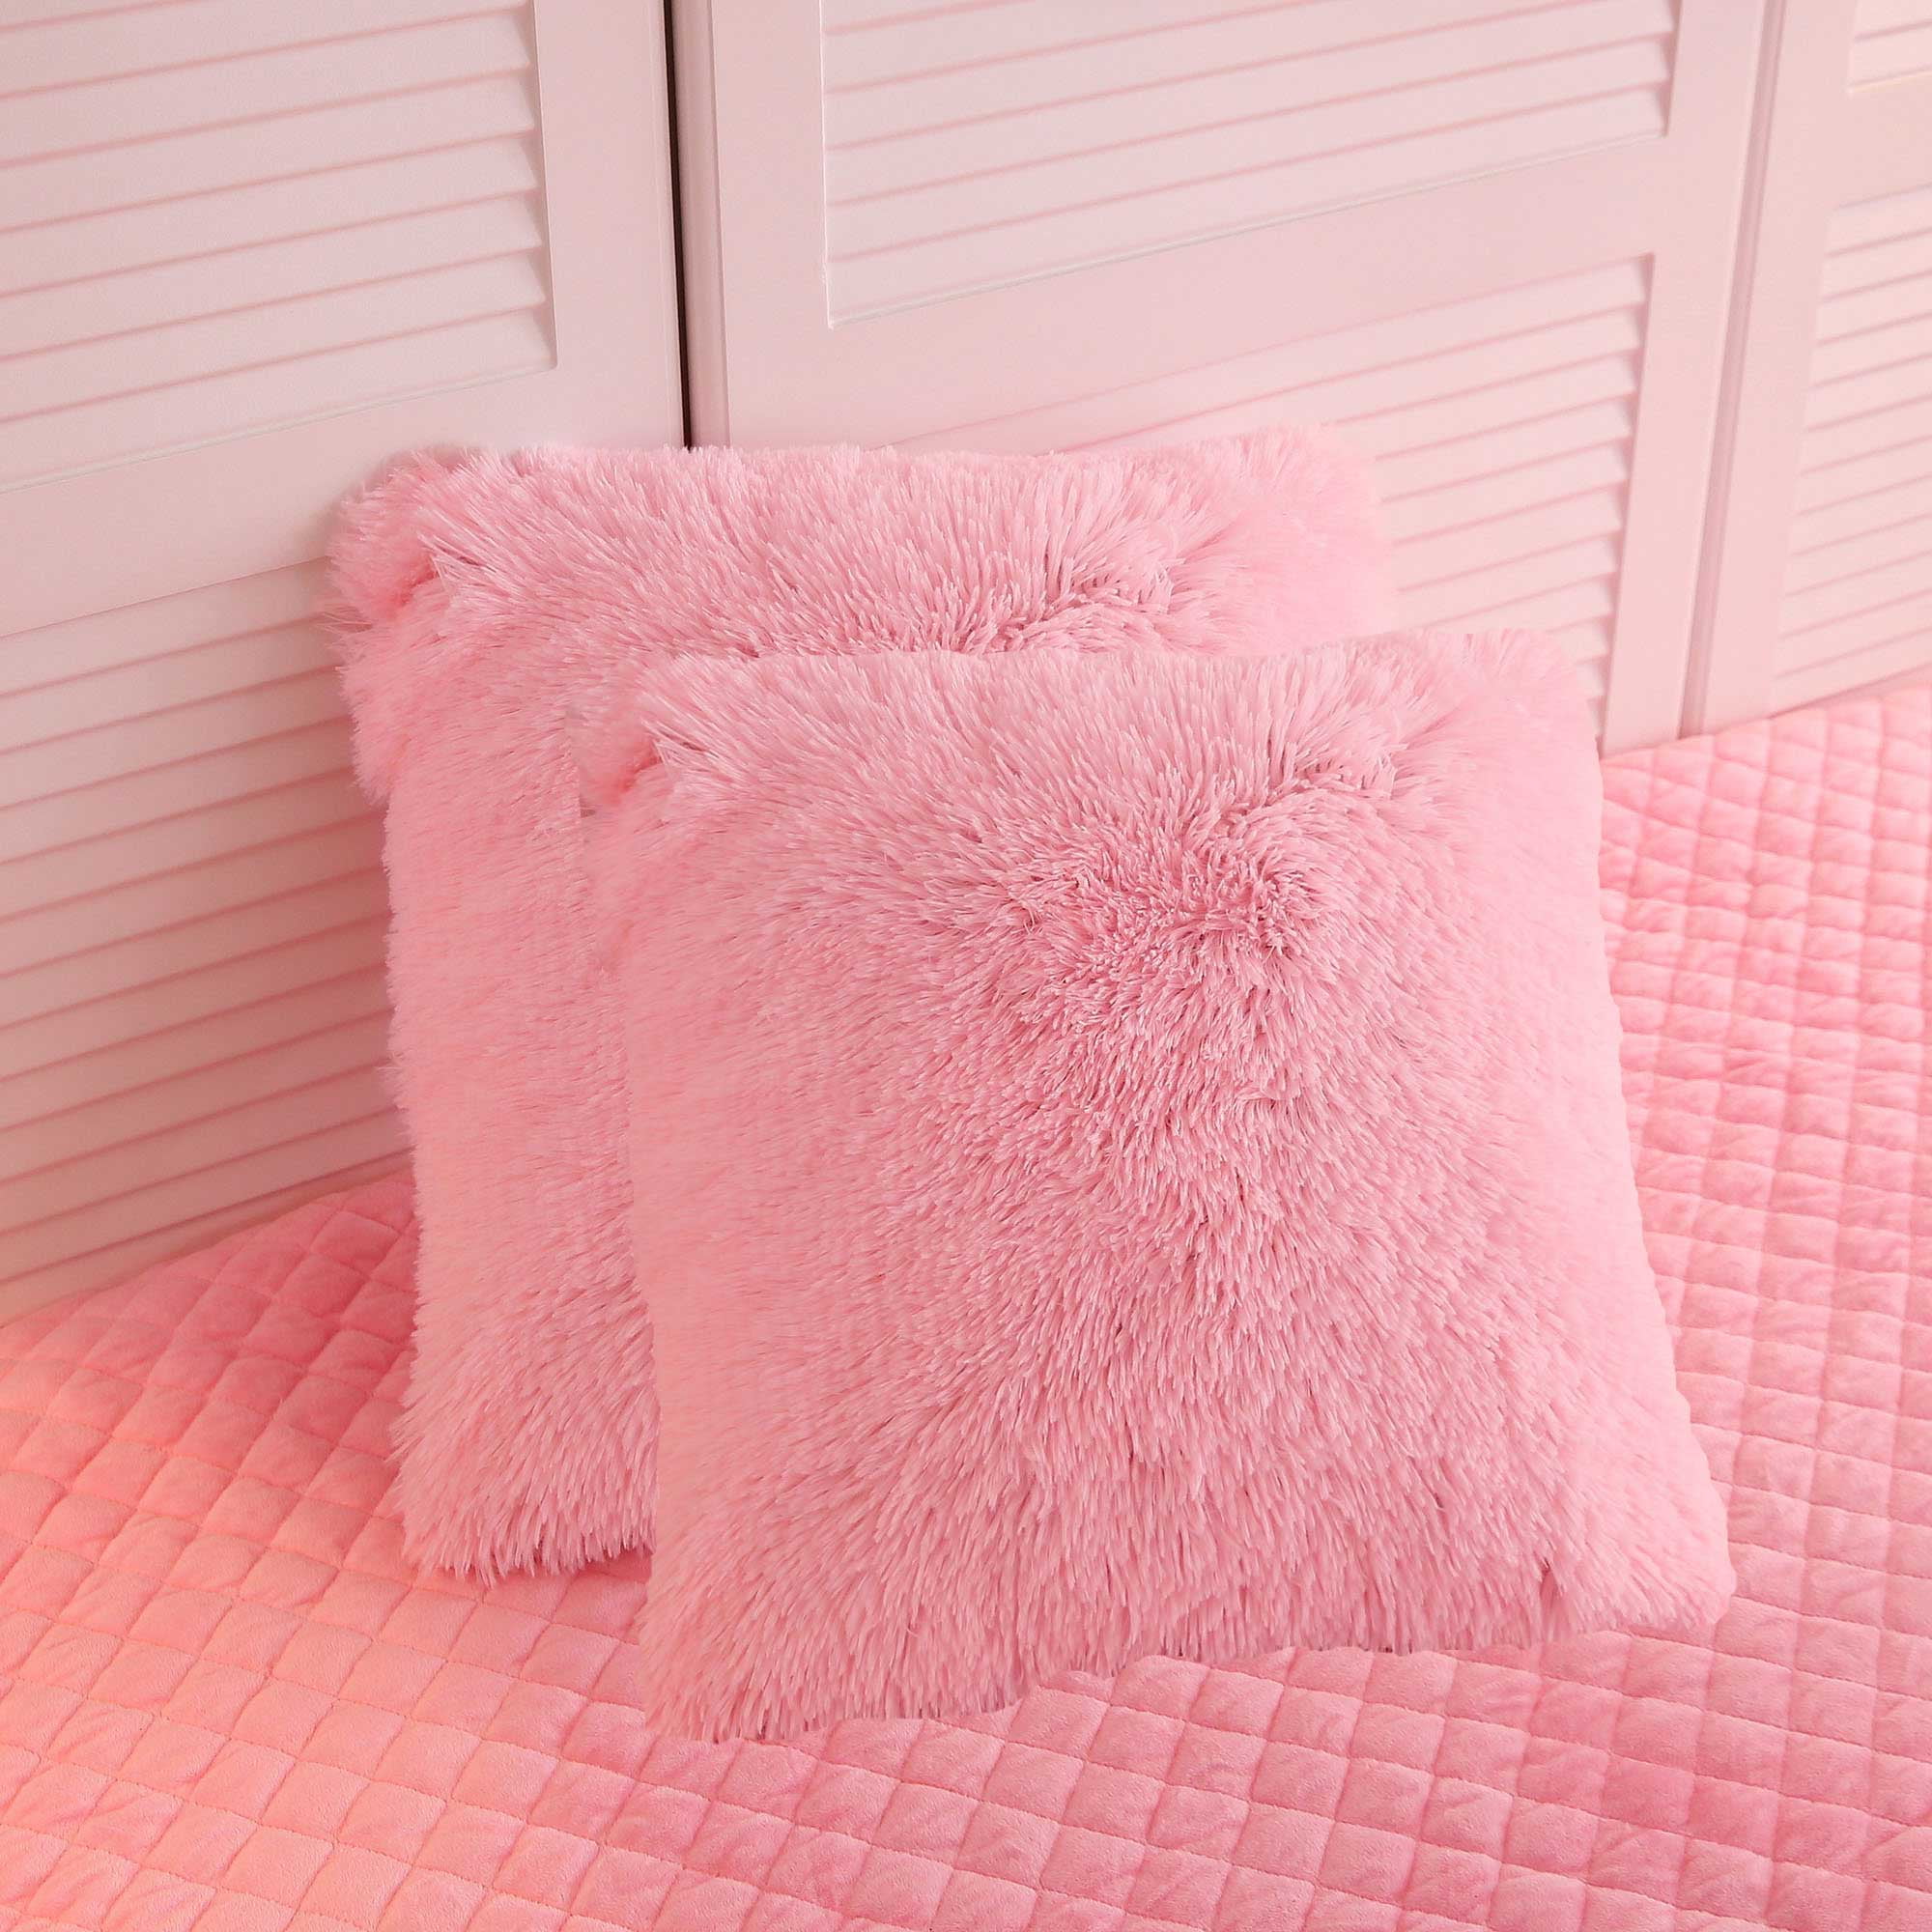 Soft Pink Heart Velveteen Pillow Cover 18 x 18